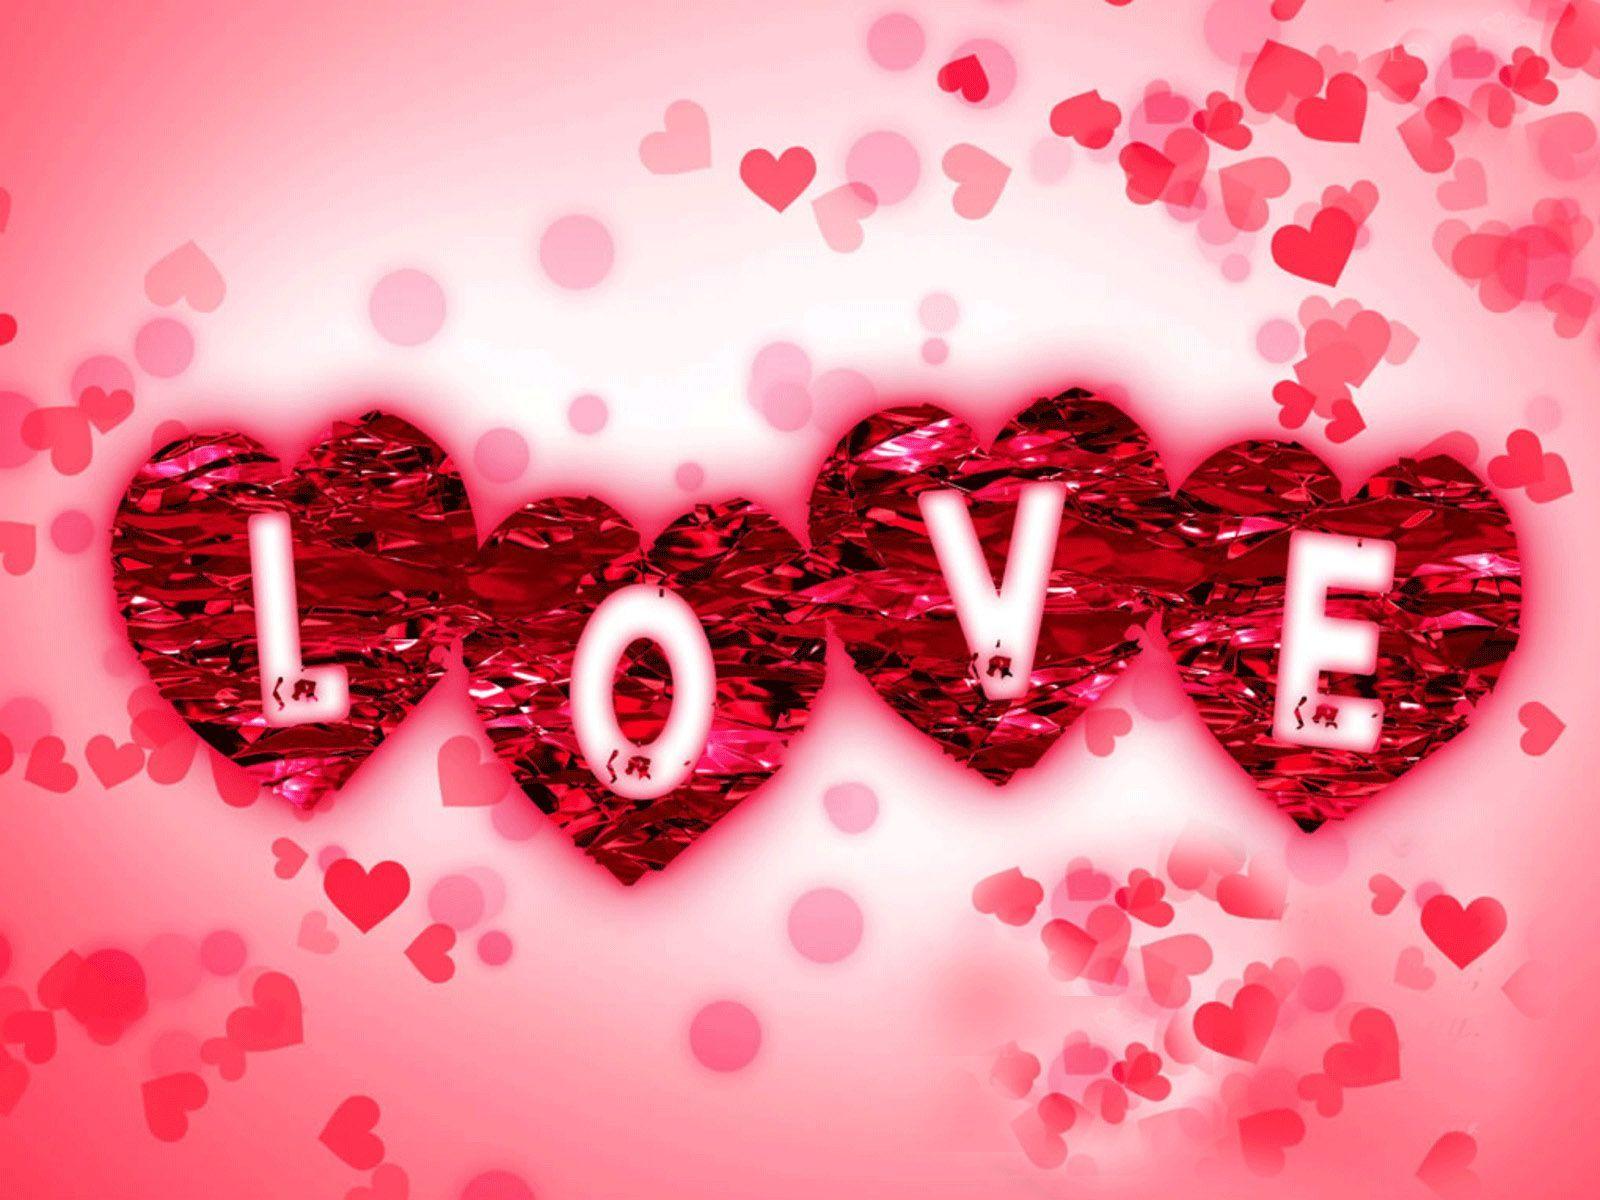 Most Wonderful love Full HD Wallpaper Image & Latest Photo Gallery